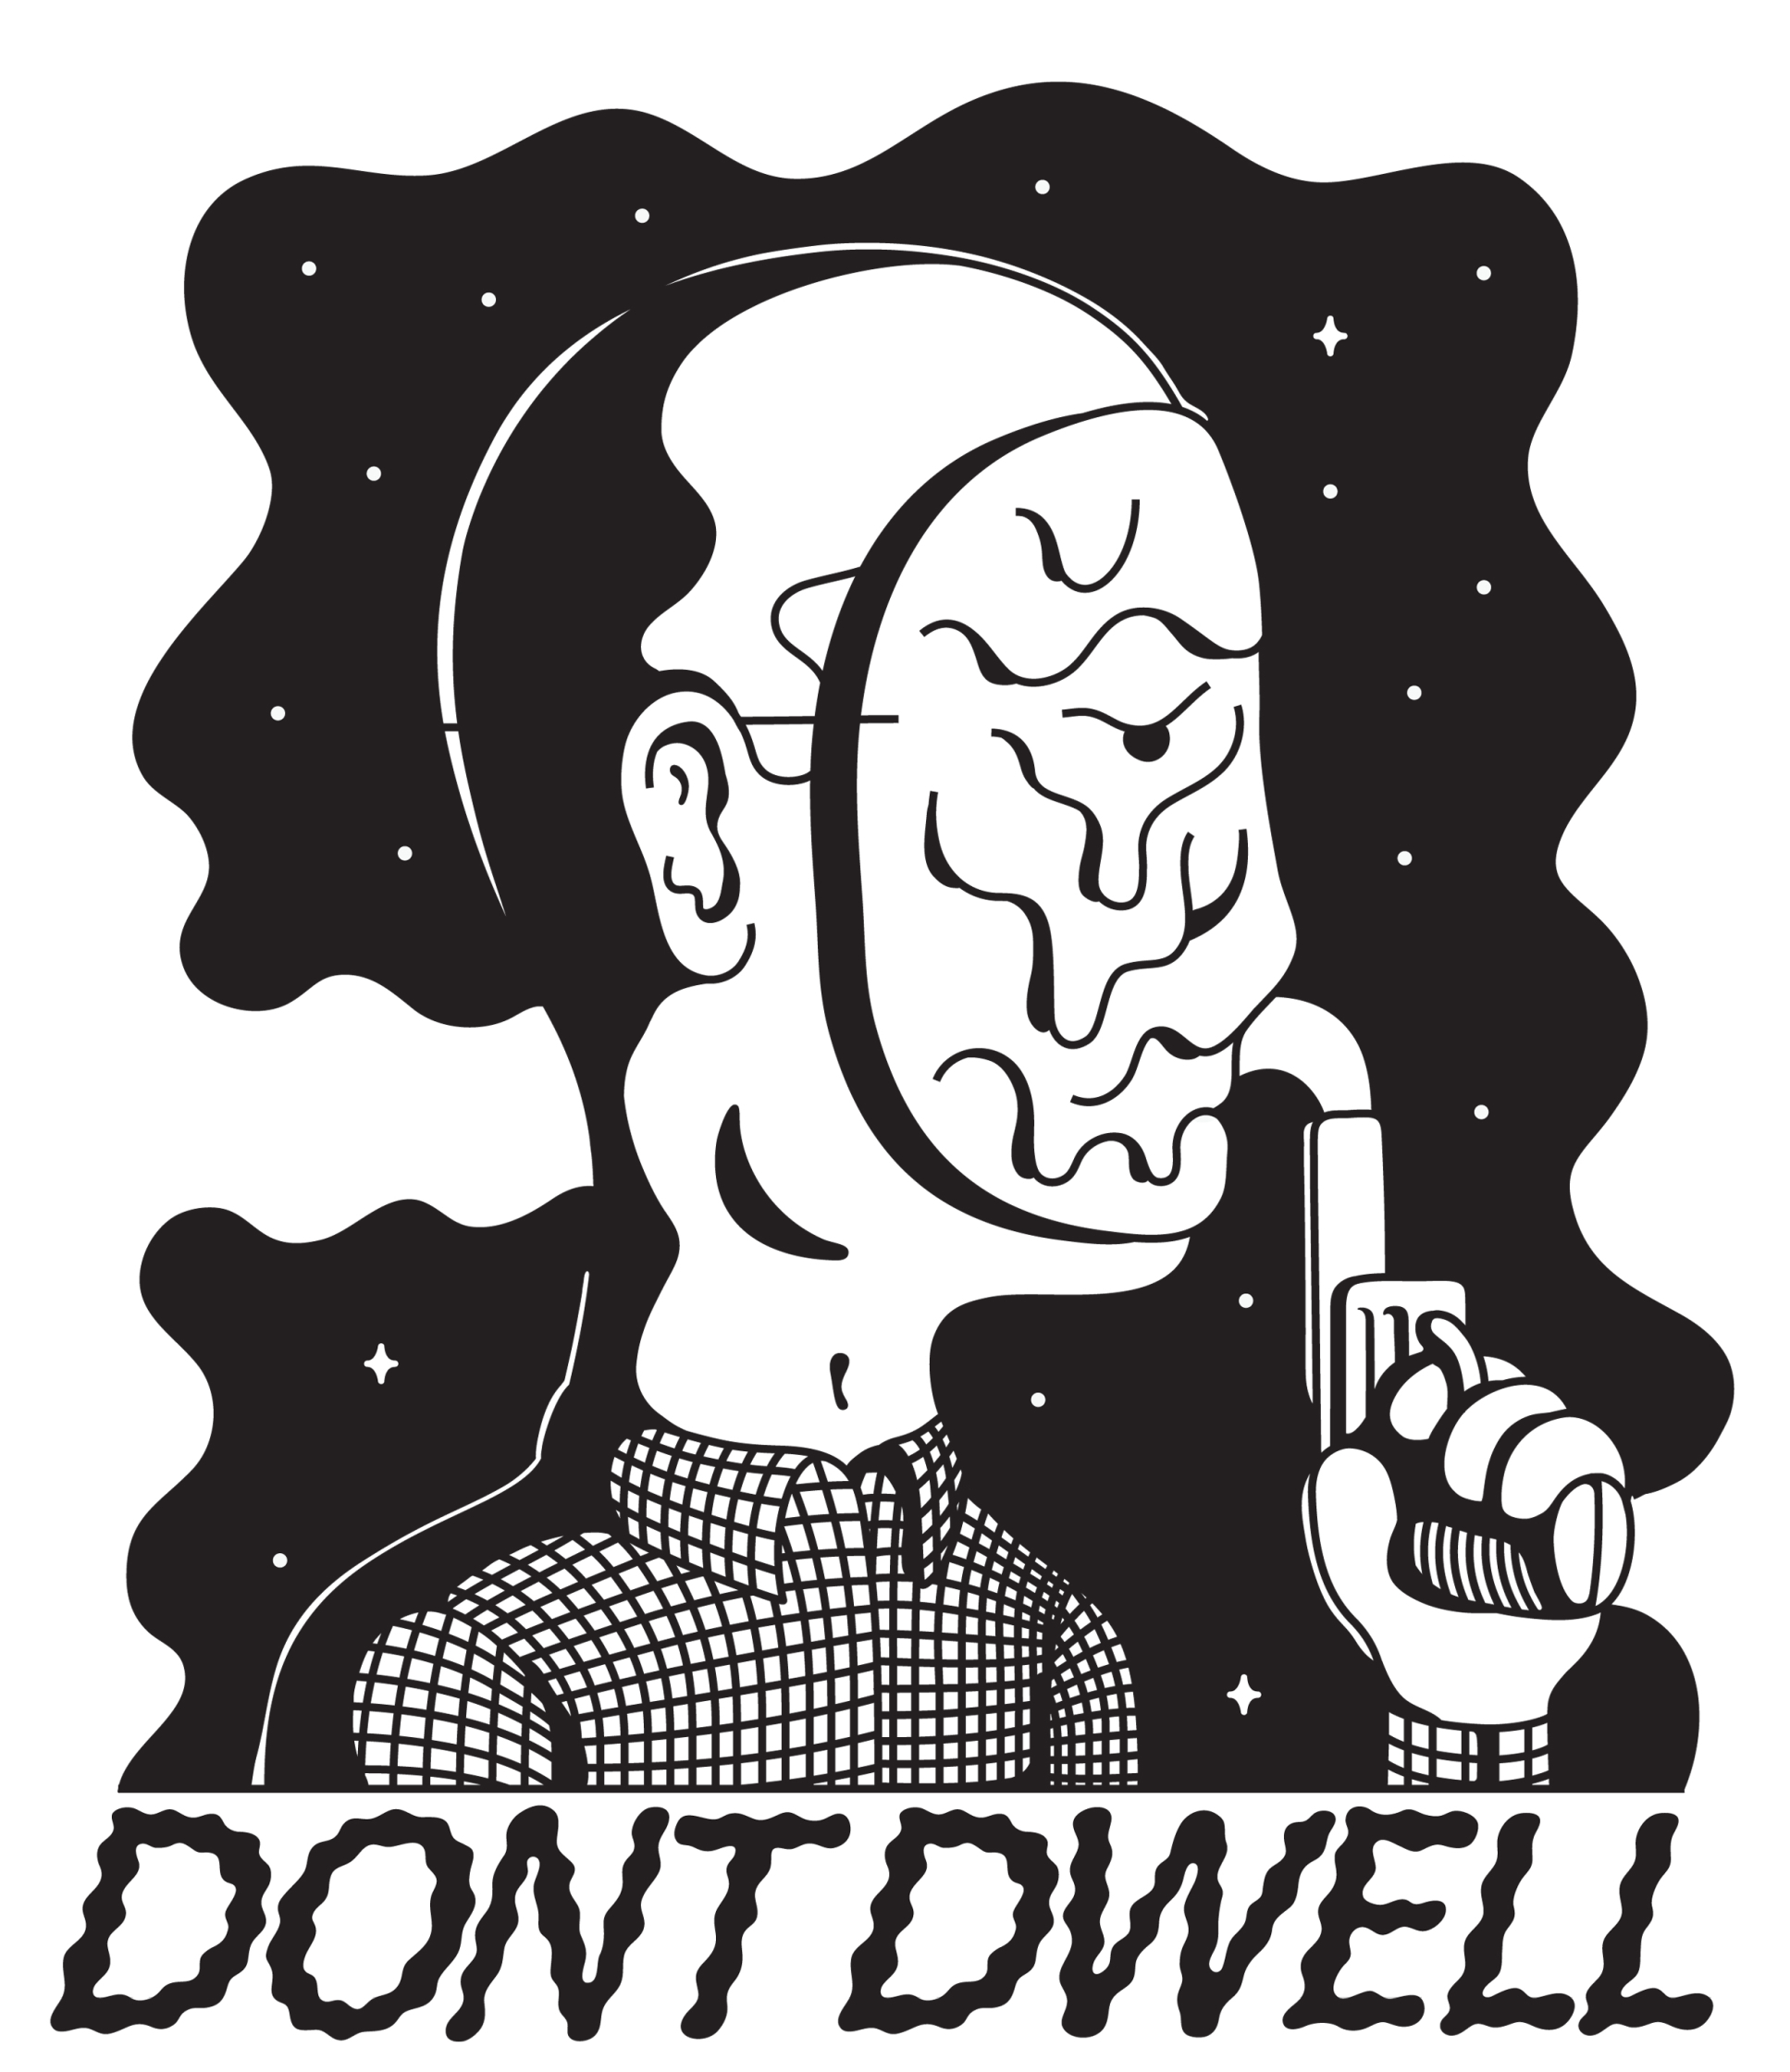 Don't Dwell